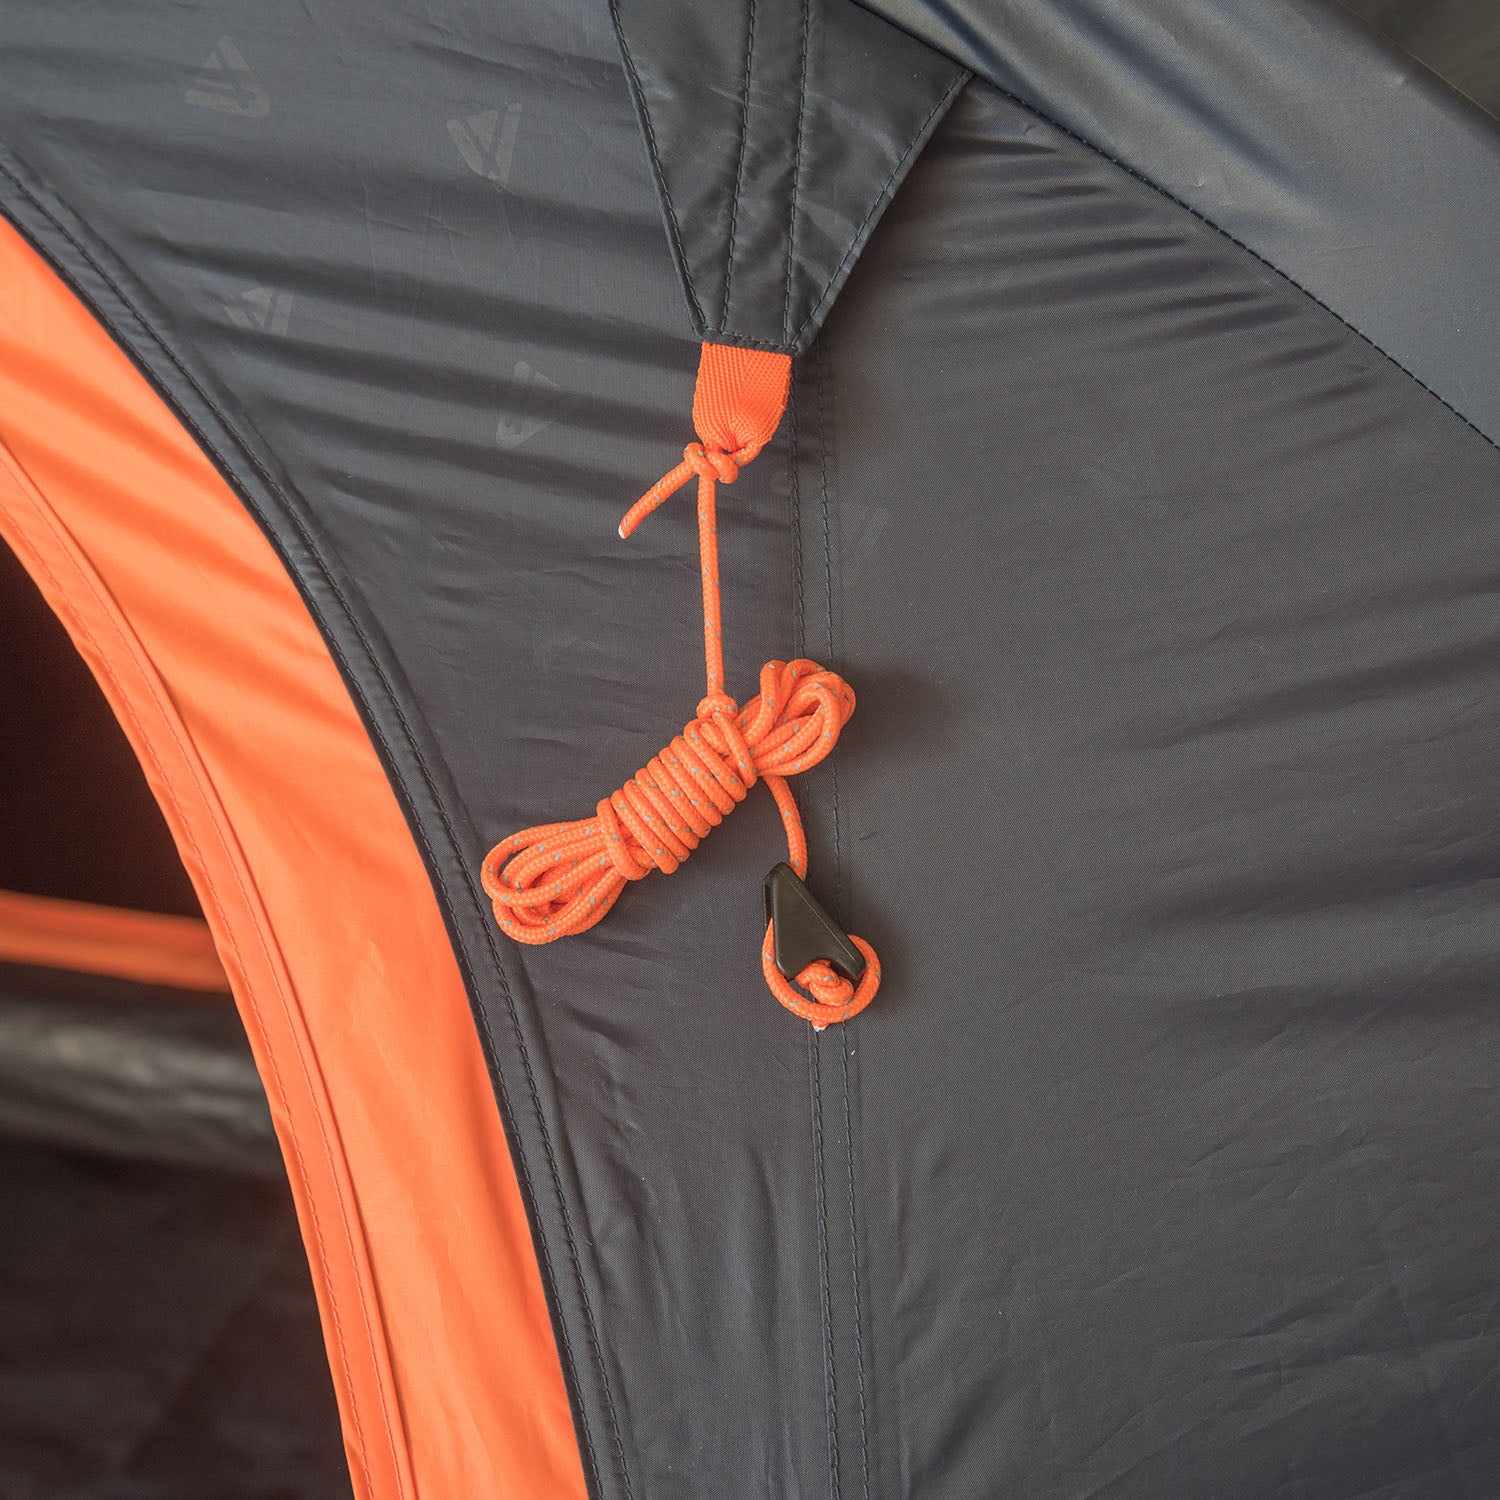 AKASA | 4 people dome tent